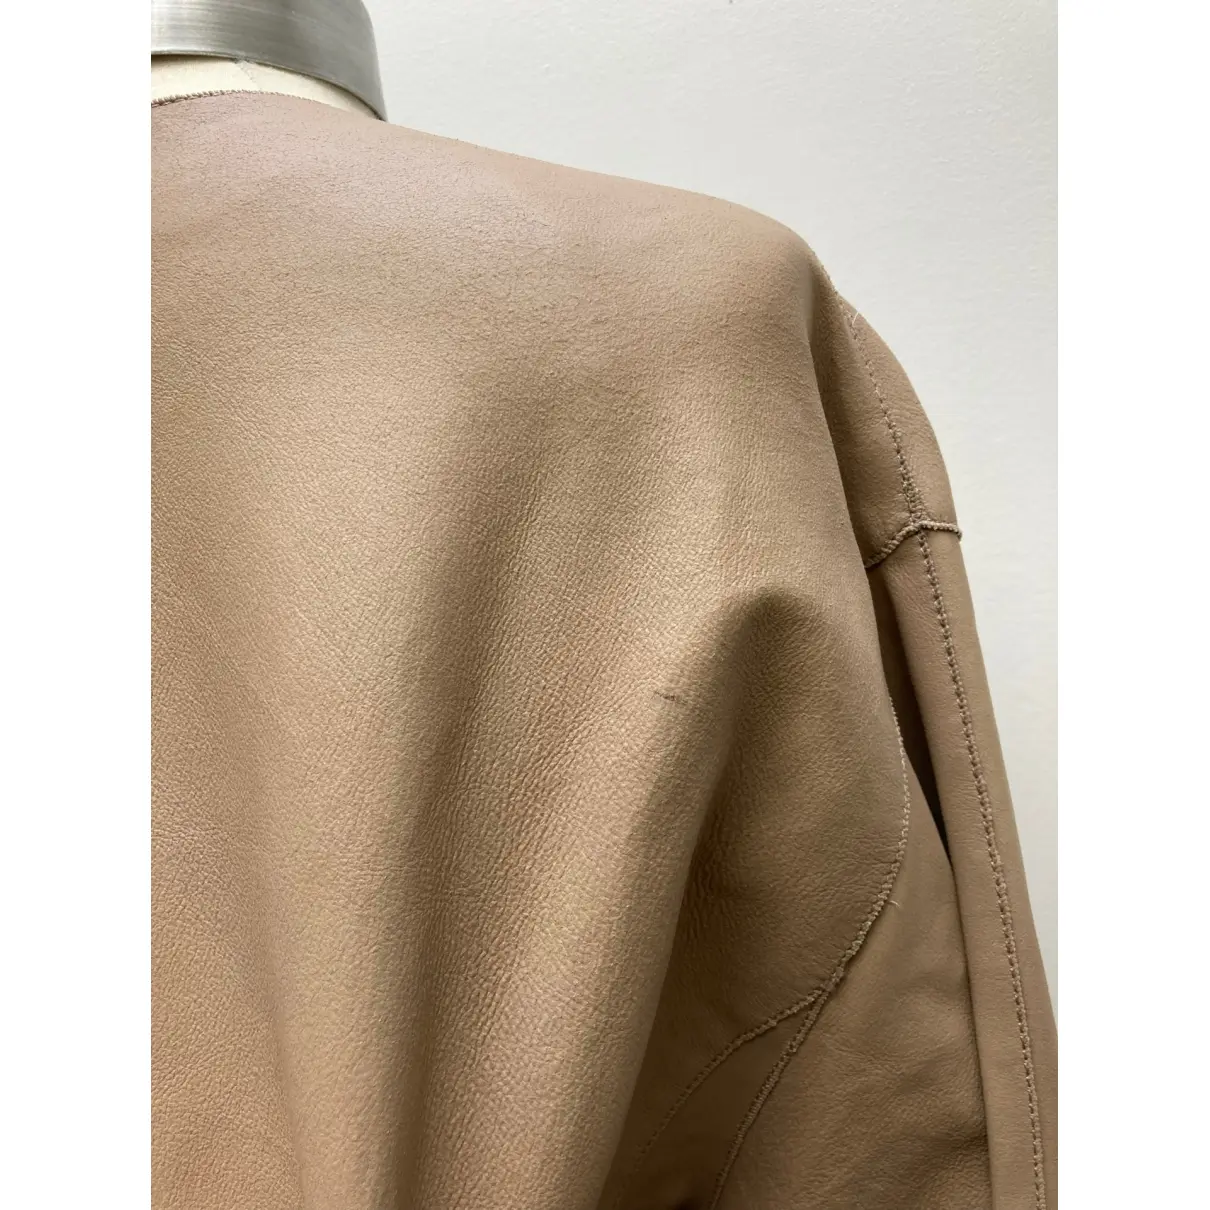 Buy Armani Collezioni Leather trench coat online